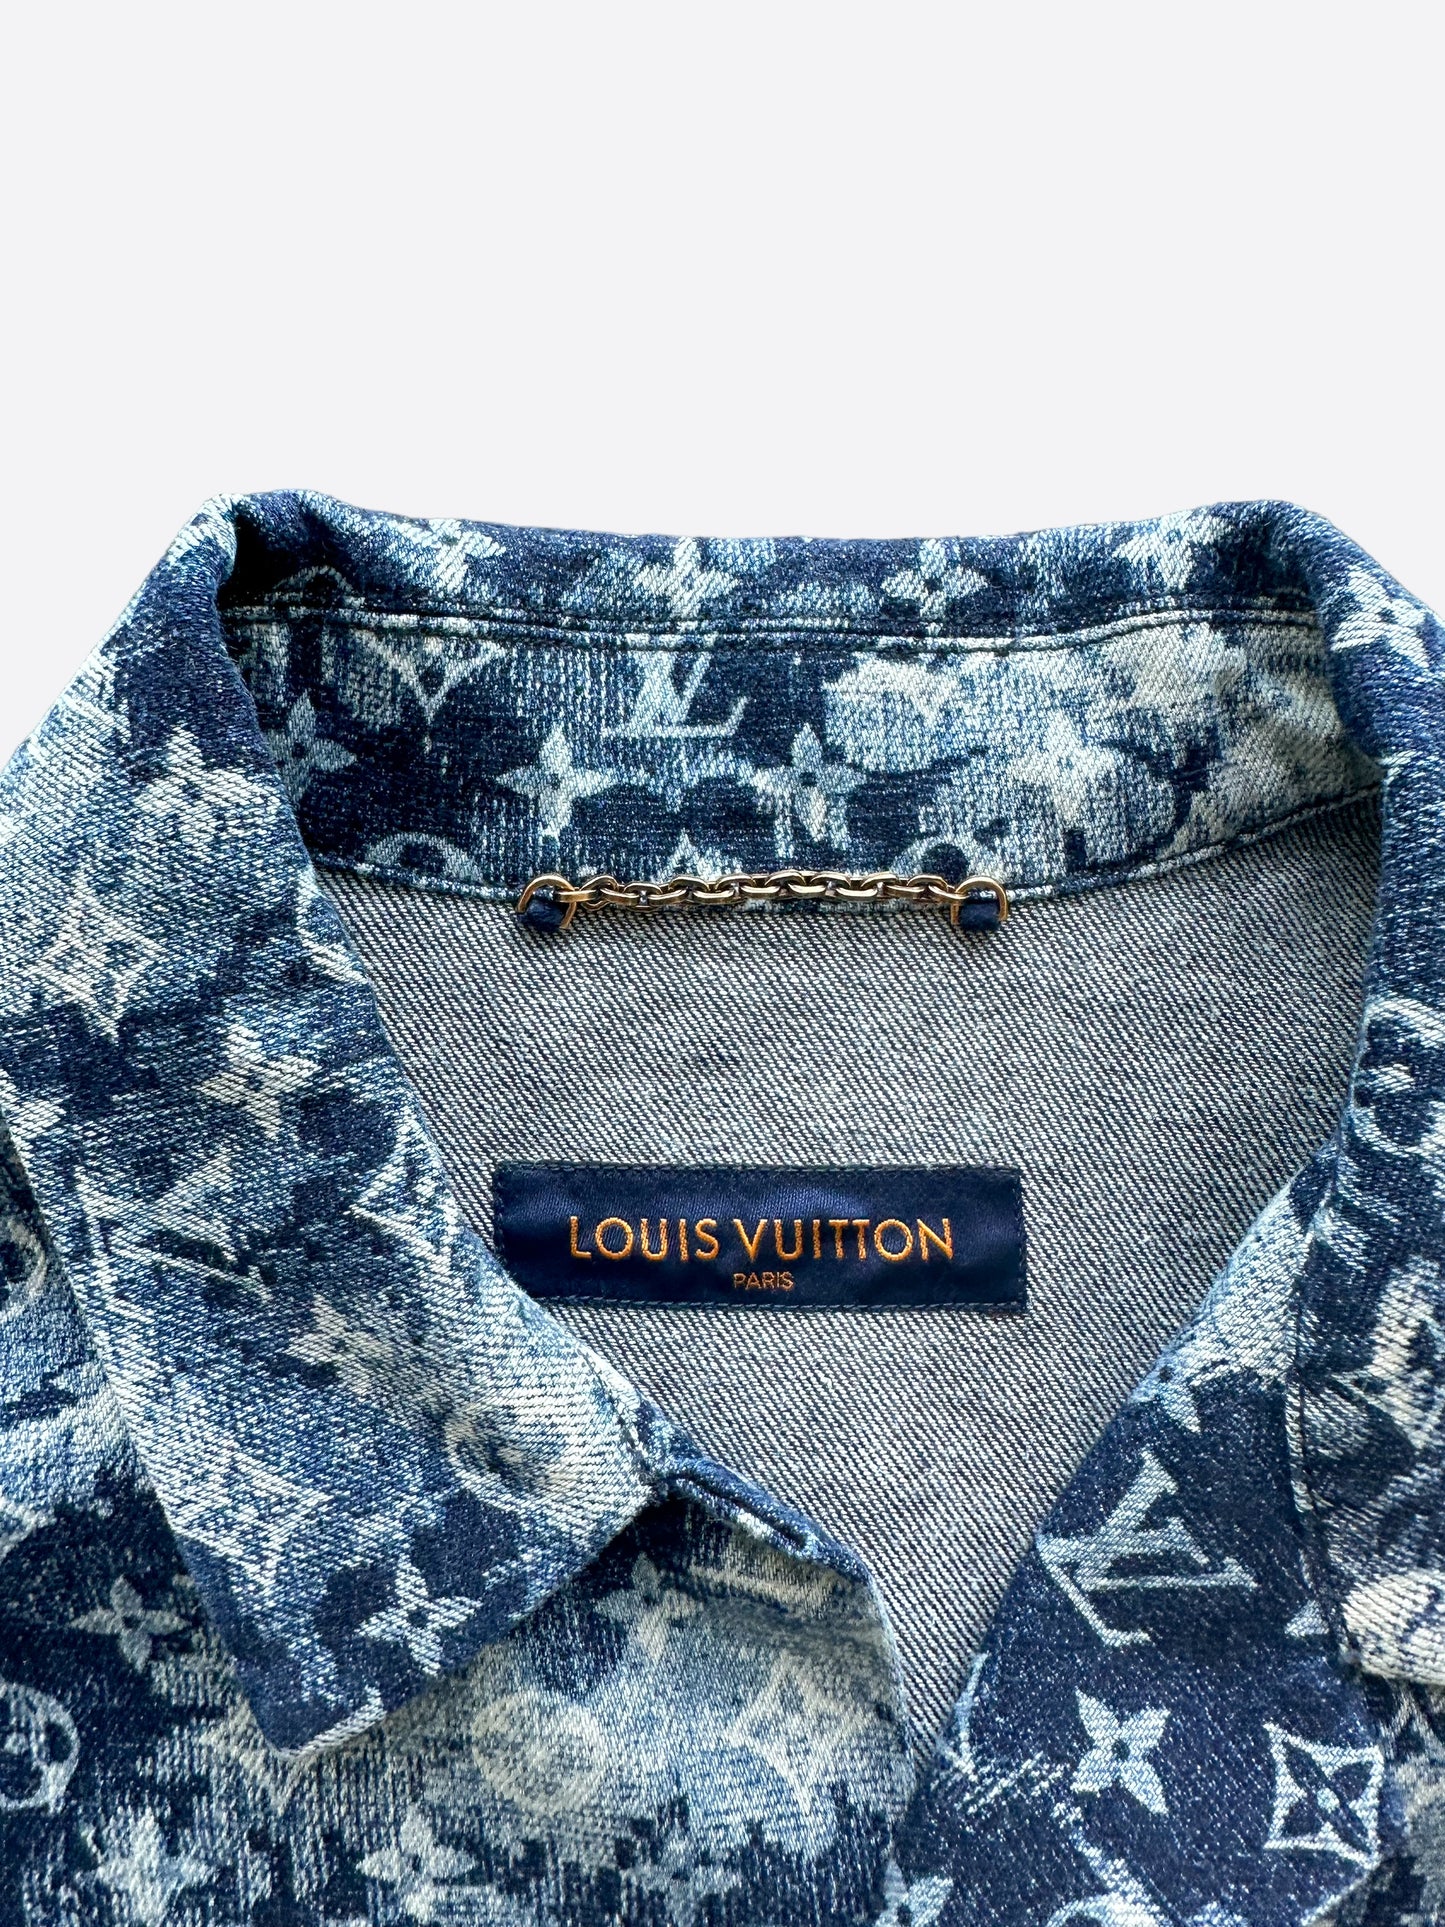 Louis Vuitton HAWAIIAN TAPESTRY SHIRT